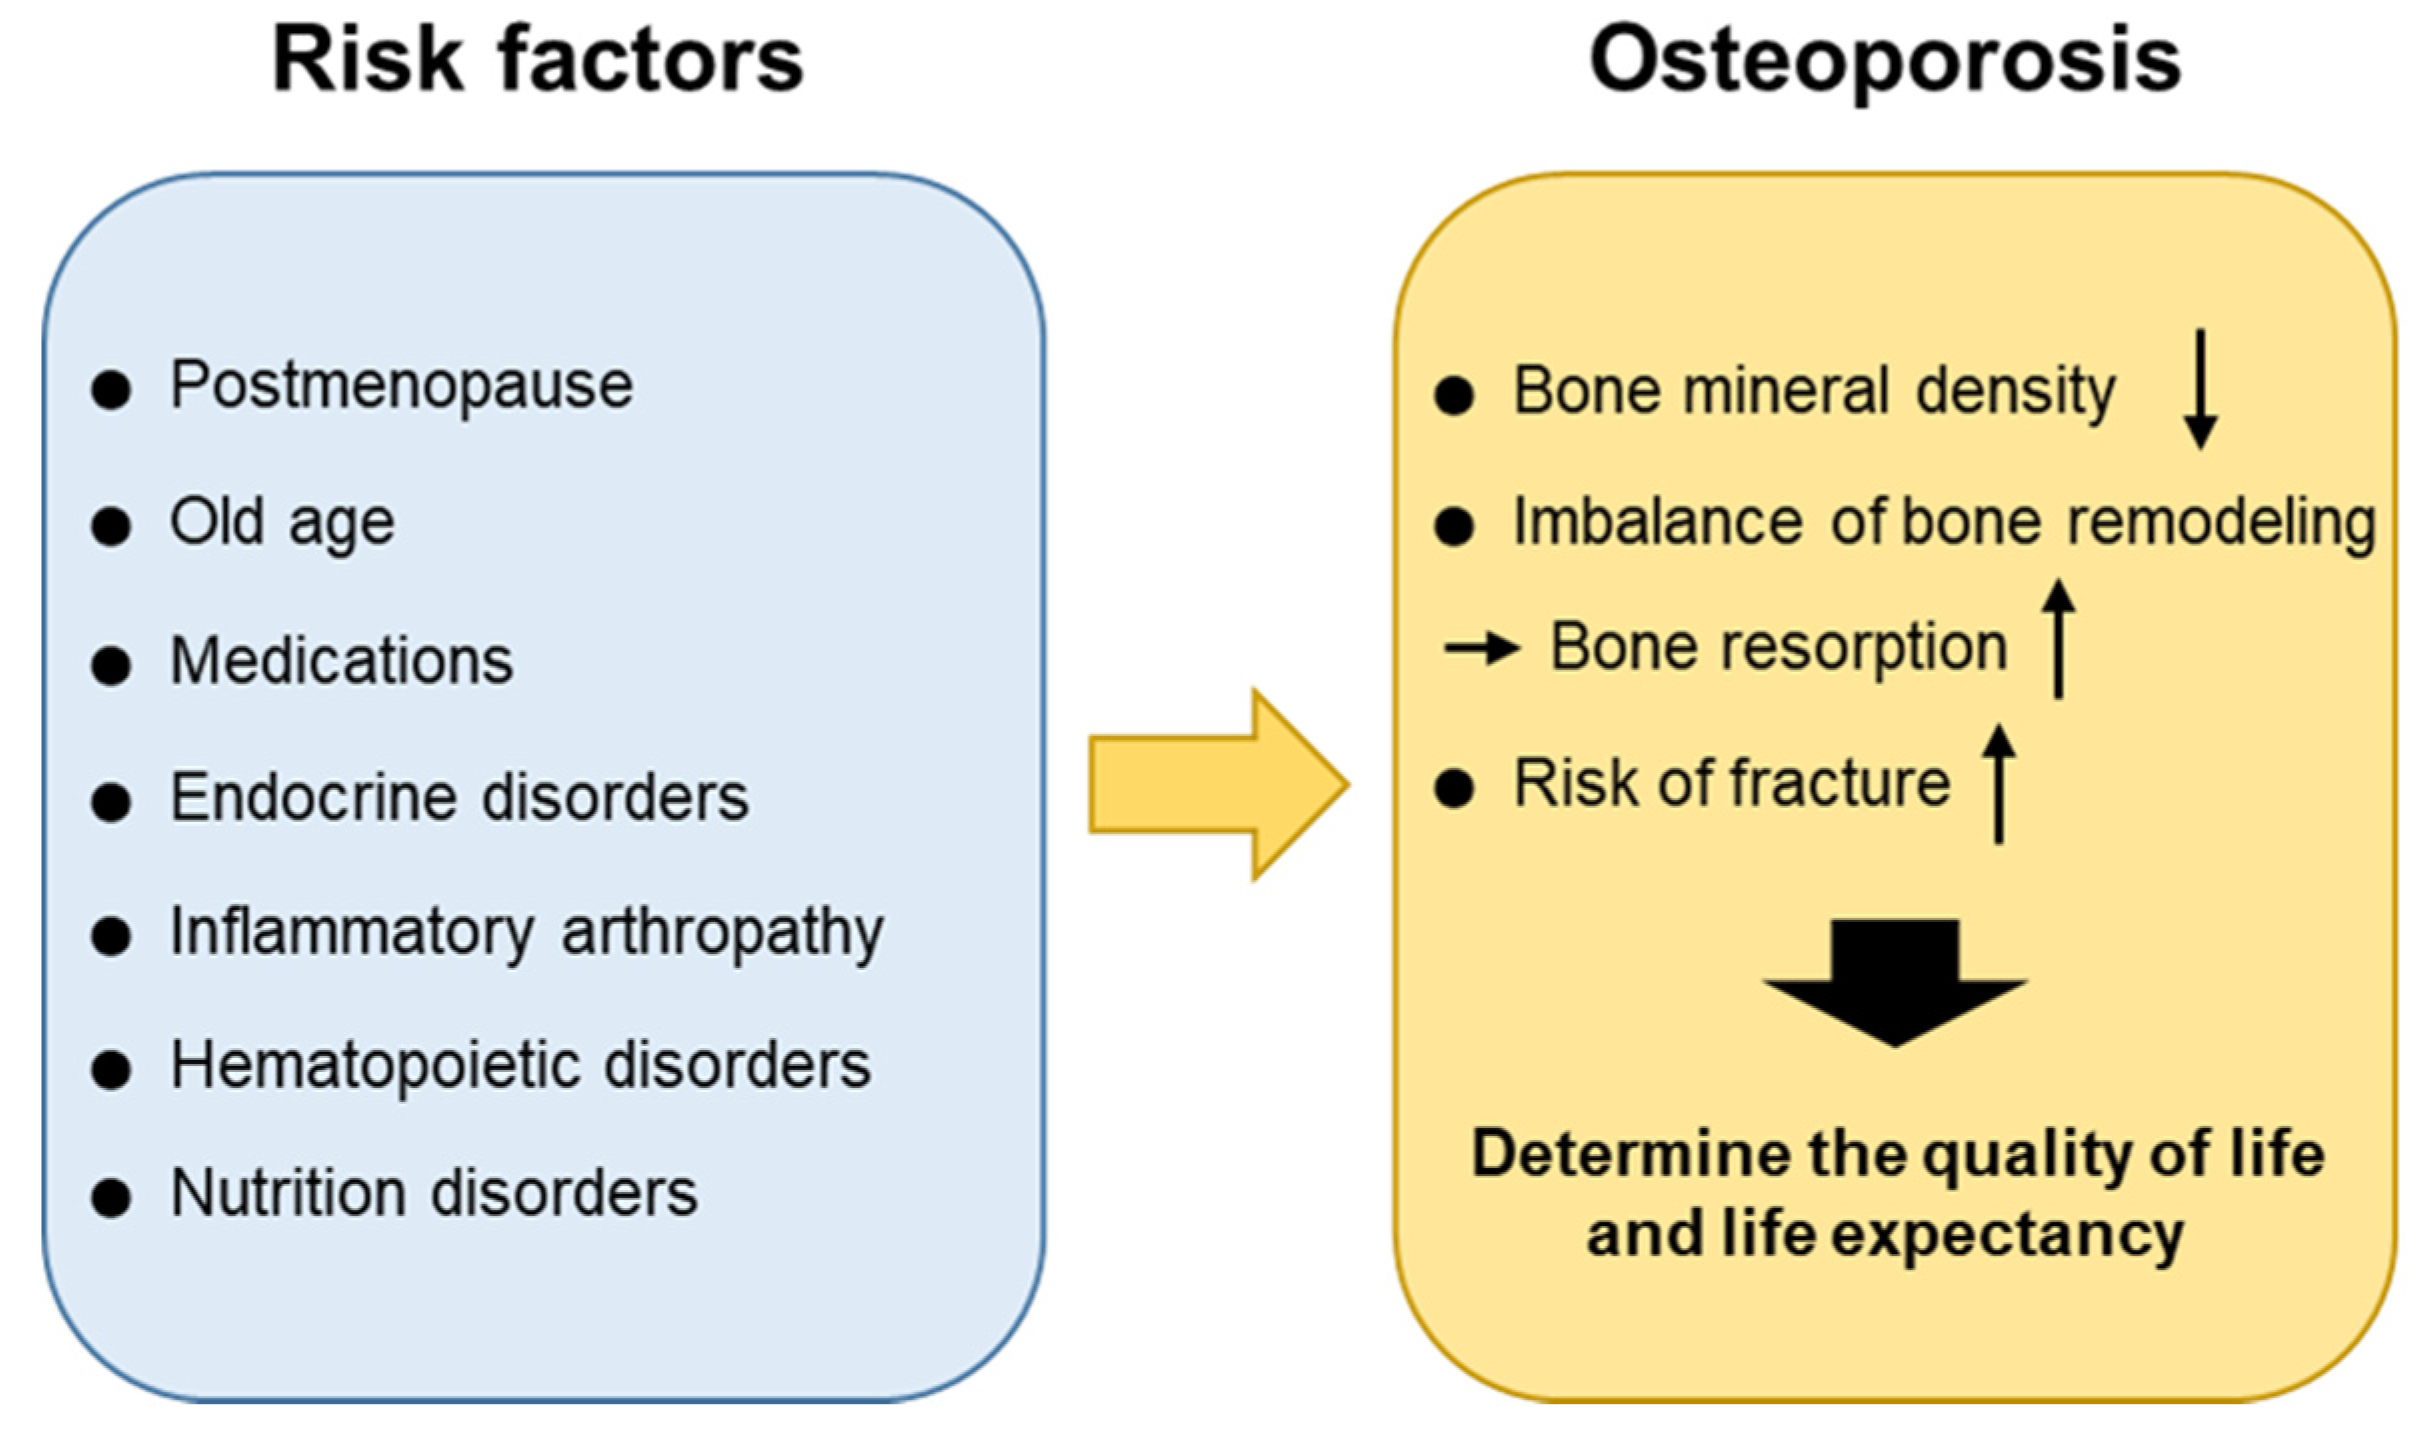 Osteoporosis risk factors